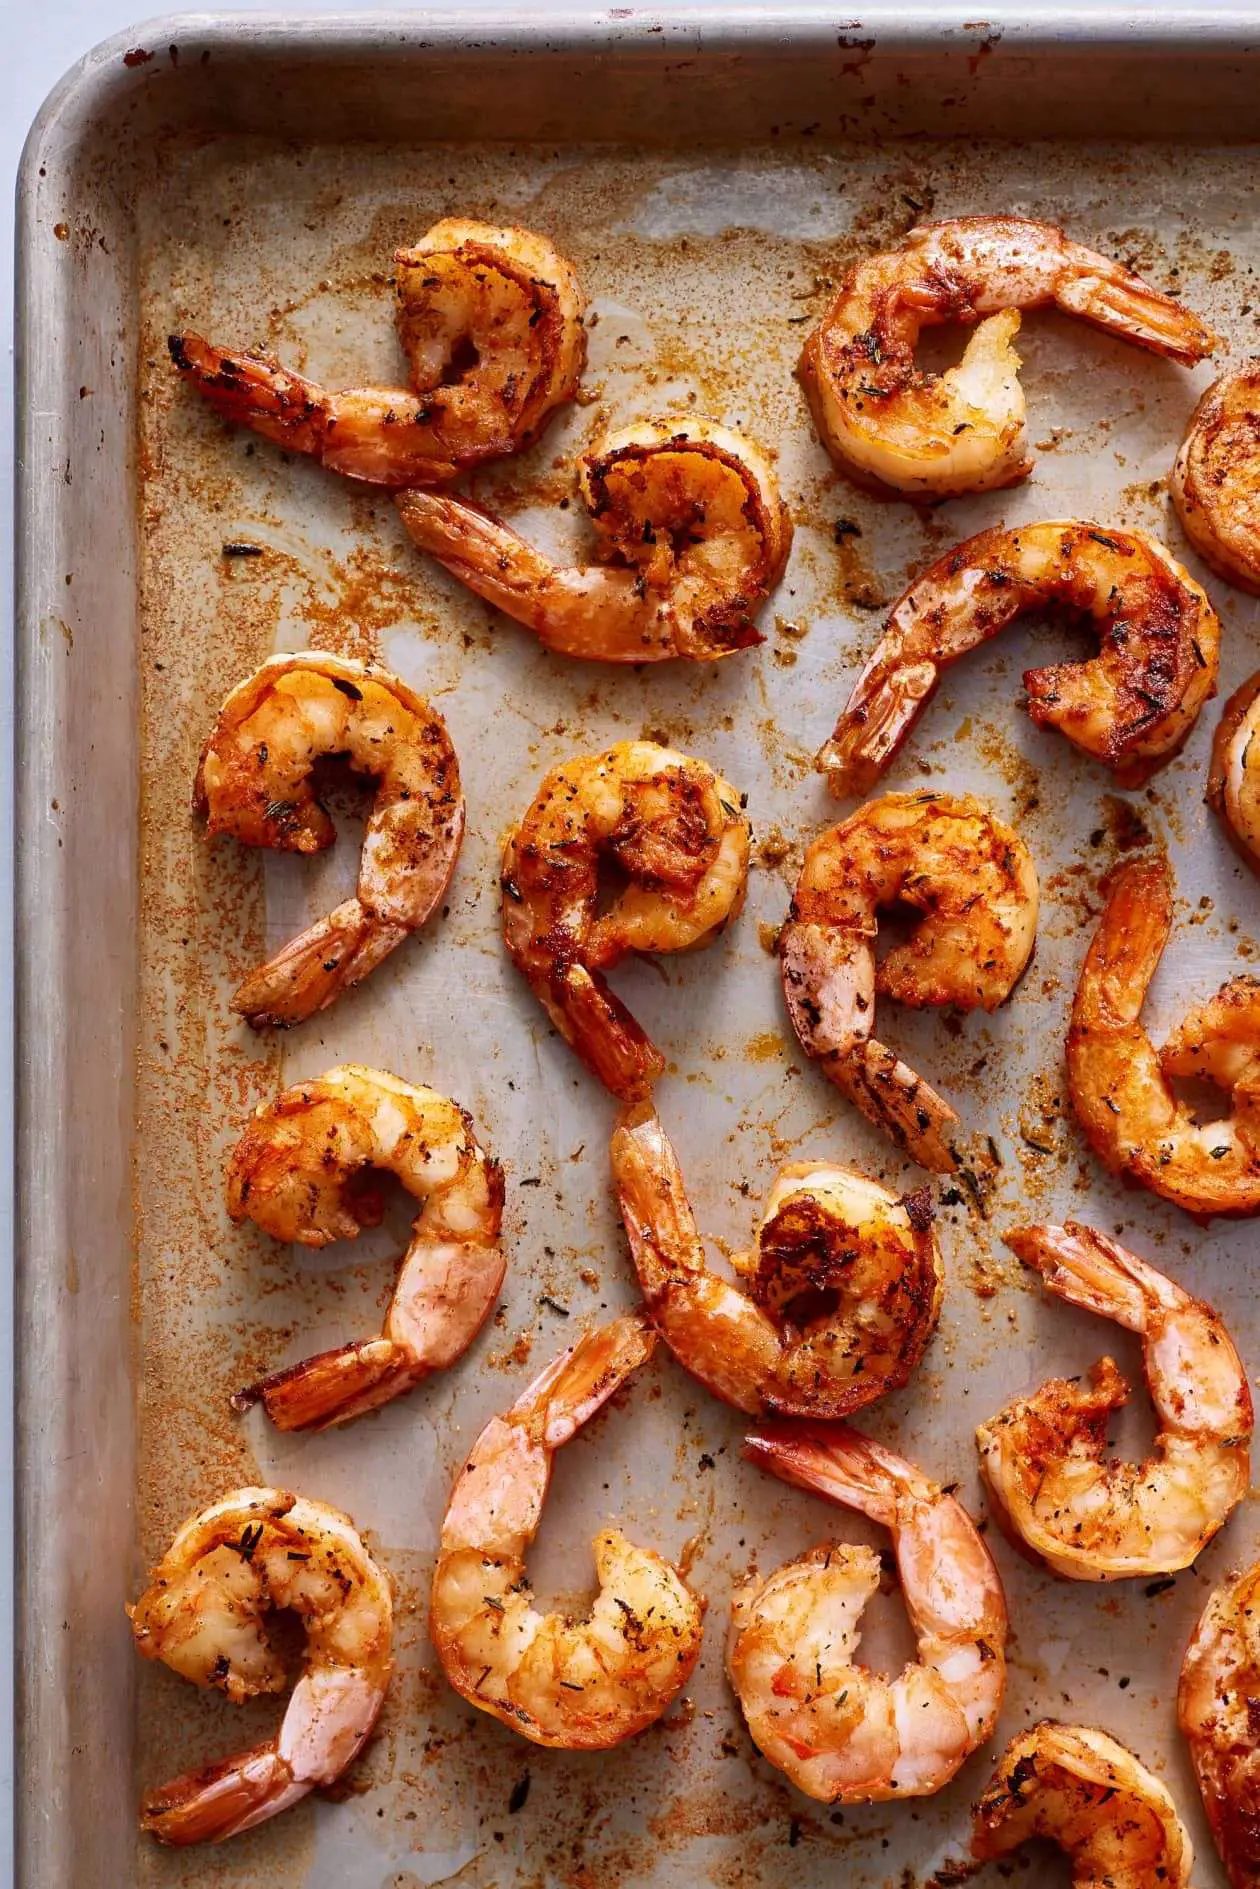 How To Cook Juicy Shrimp from Frozen